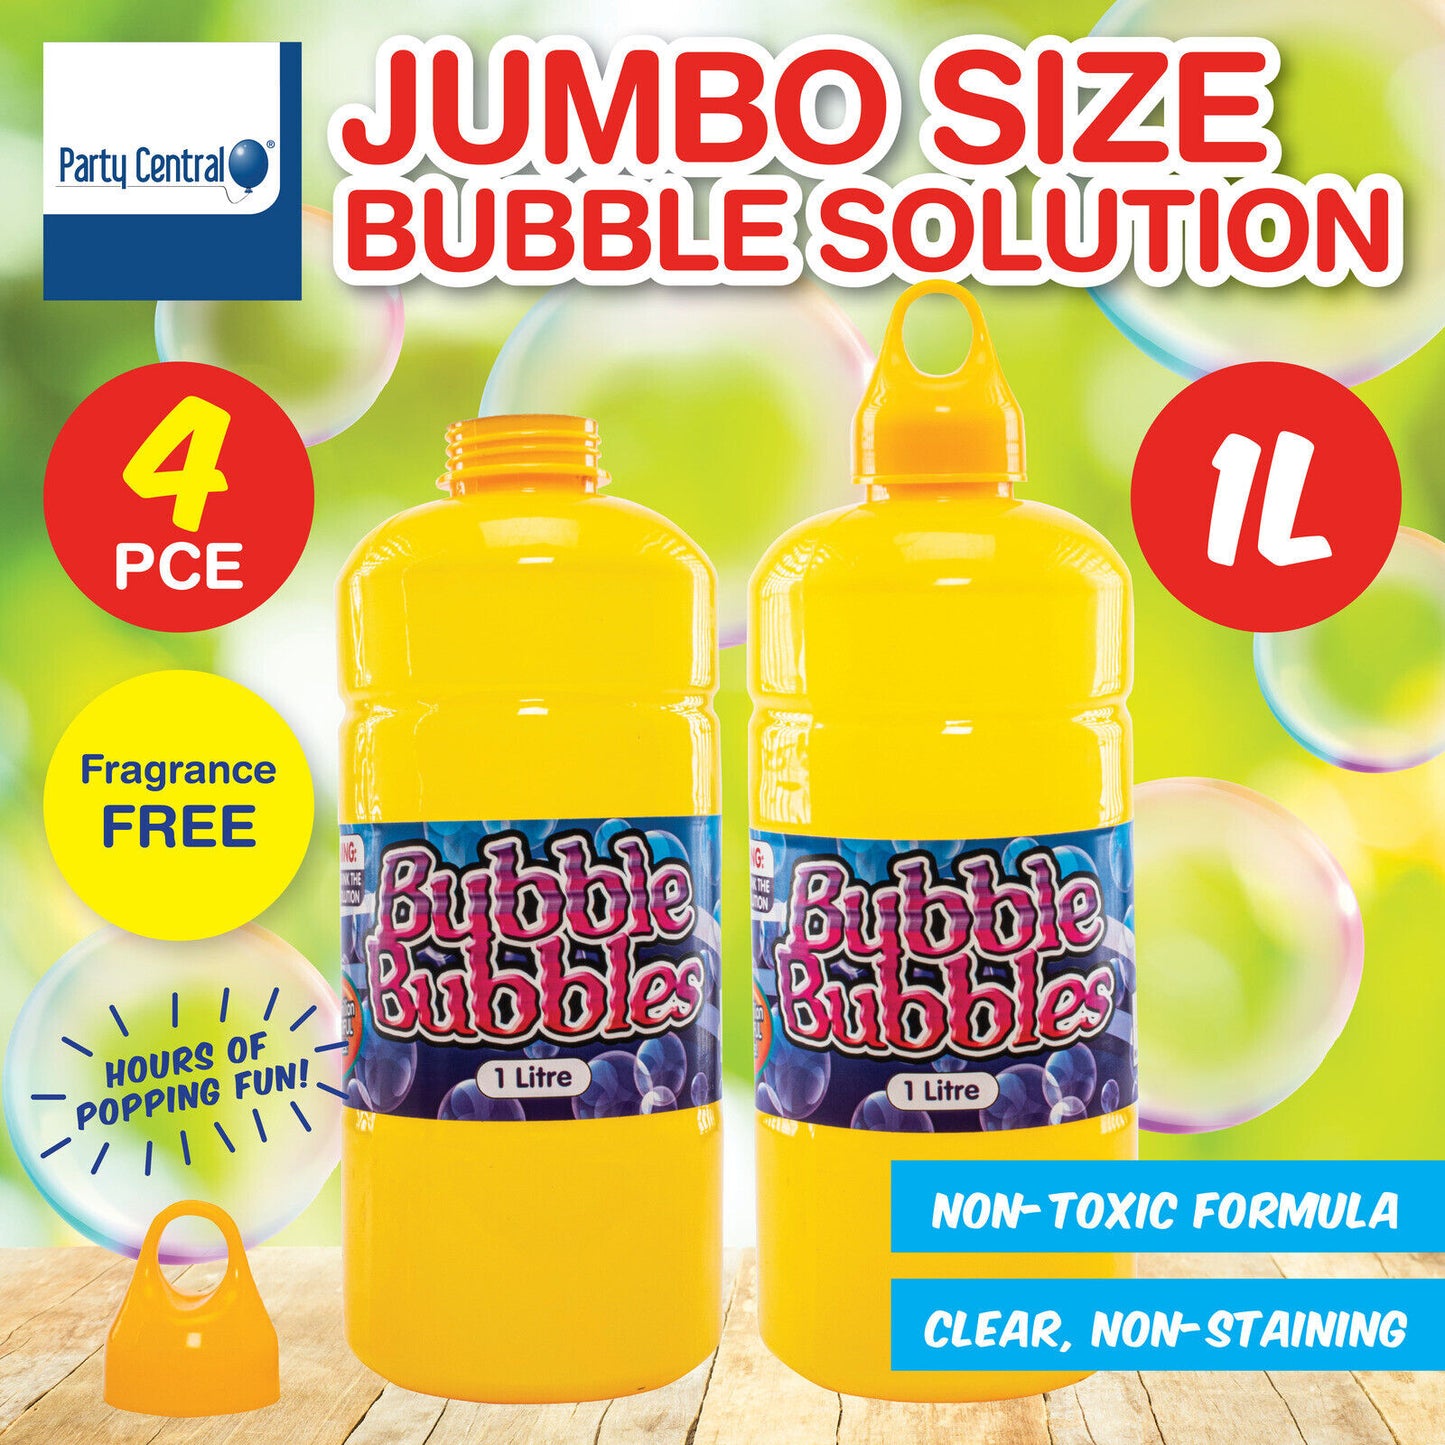 4PK Bubble Solution Jumbo Size Non-Toxic Fragrance Free Endless Fun 1L